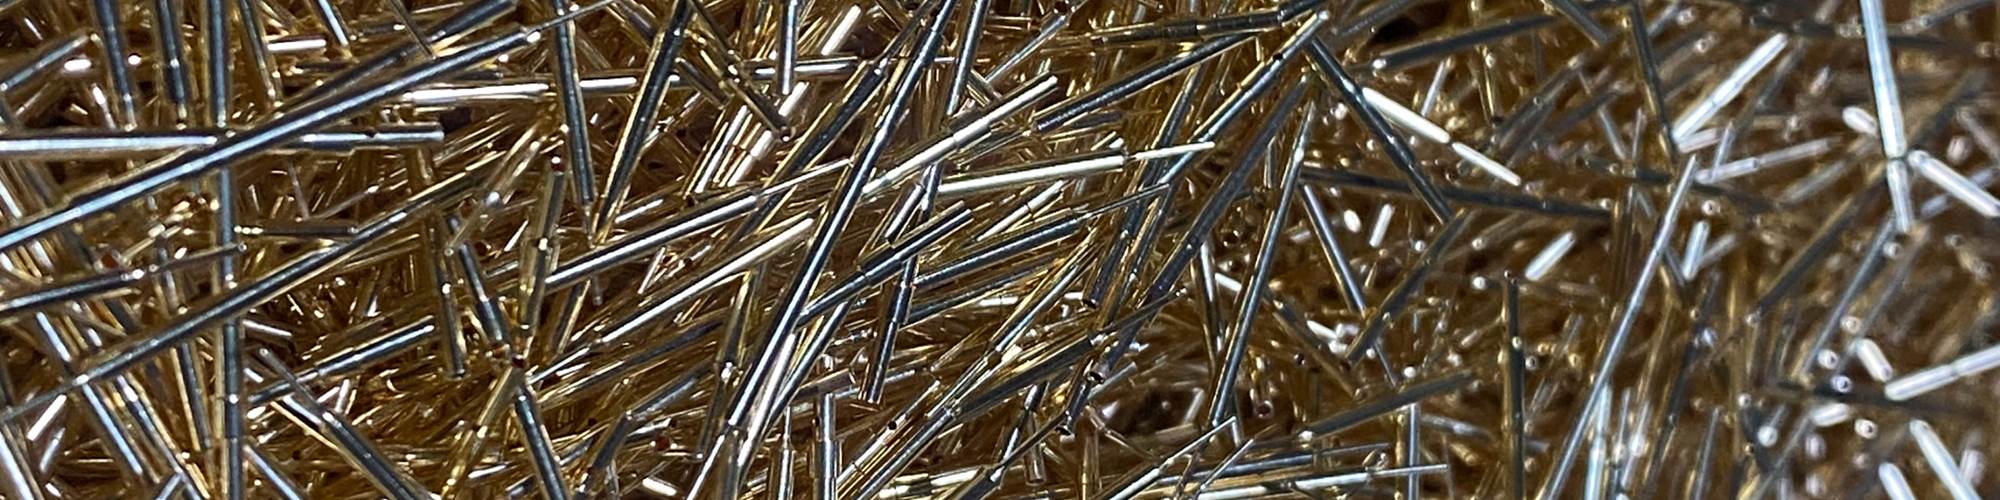 Why You Should Clean Your Brass Scrap Metal – Gardner Metal